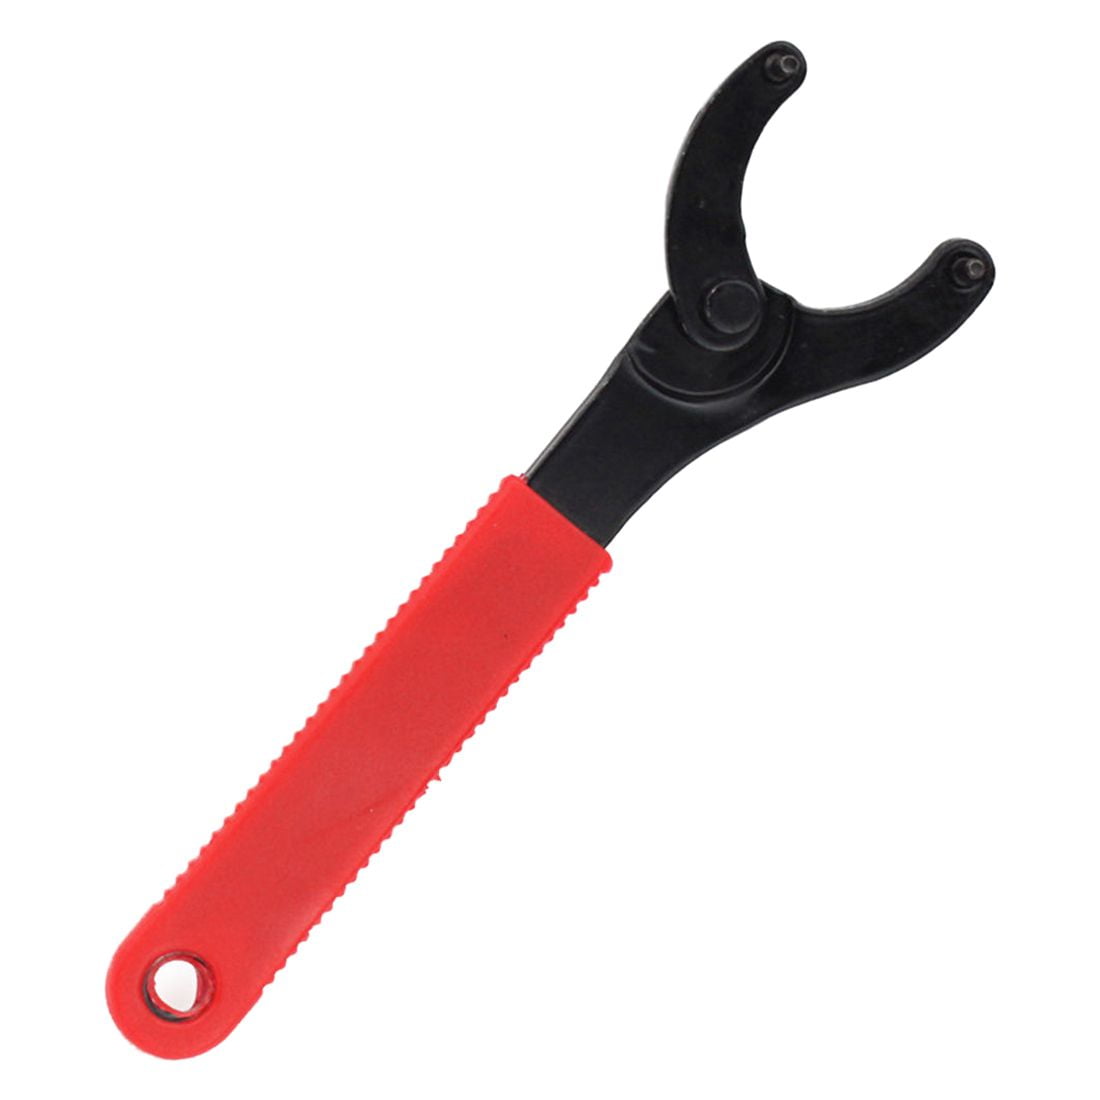 Bicycle Bottom Bracket Lock Ring Remover Crank Repair Spanner Wrench Tool Kits 